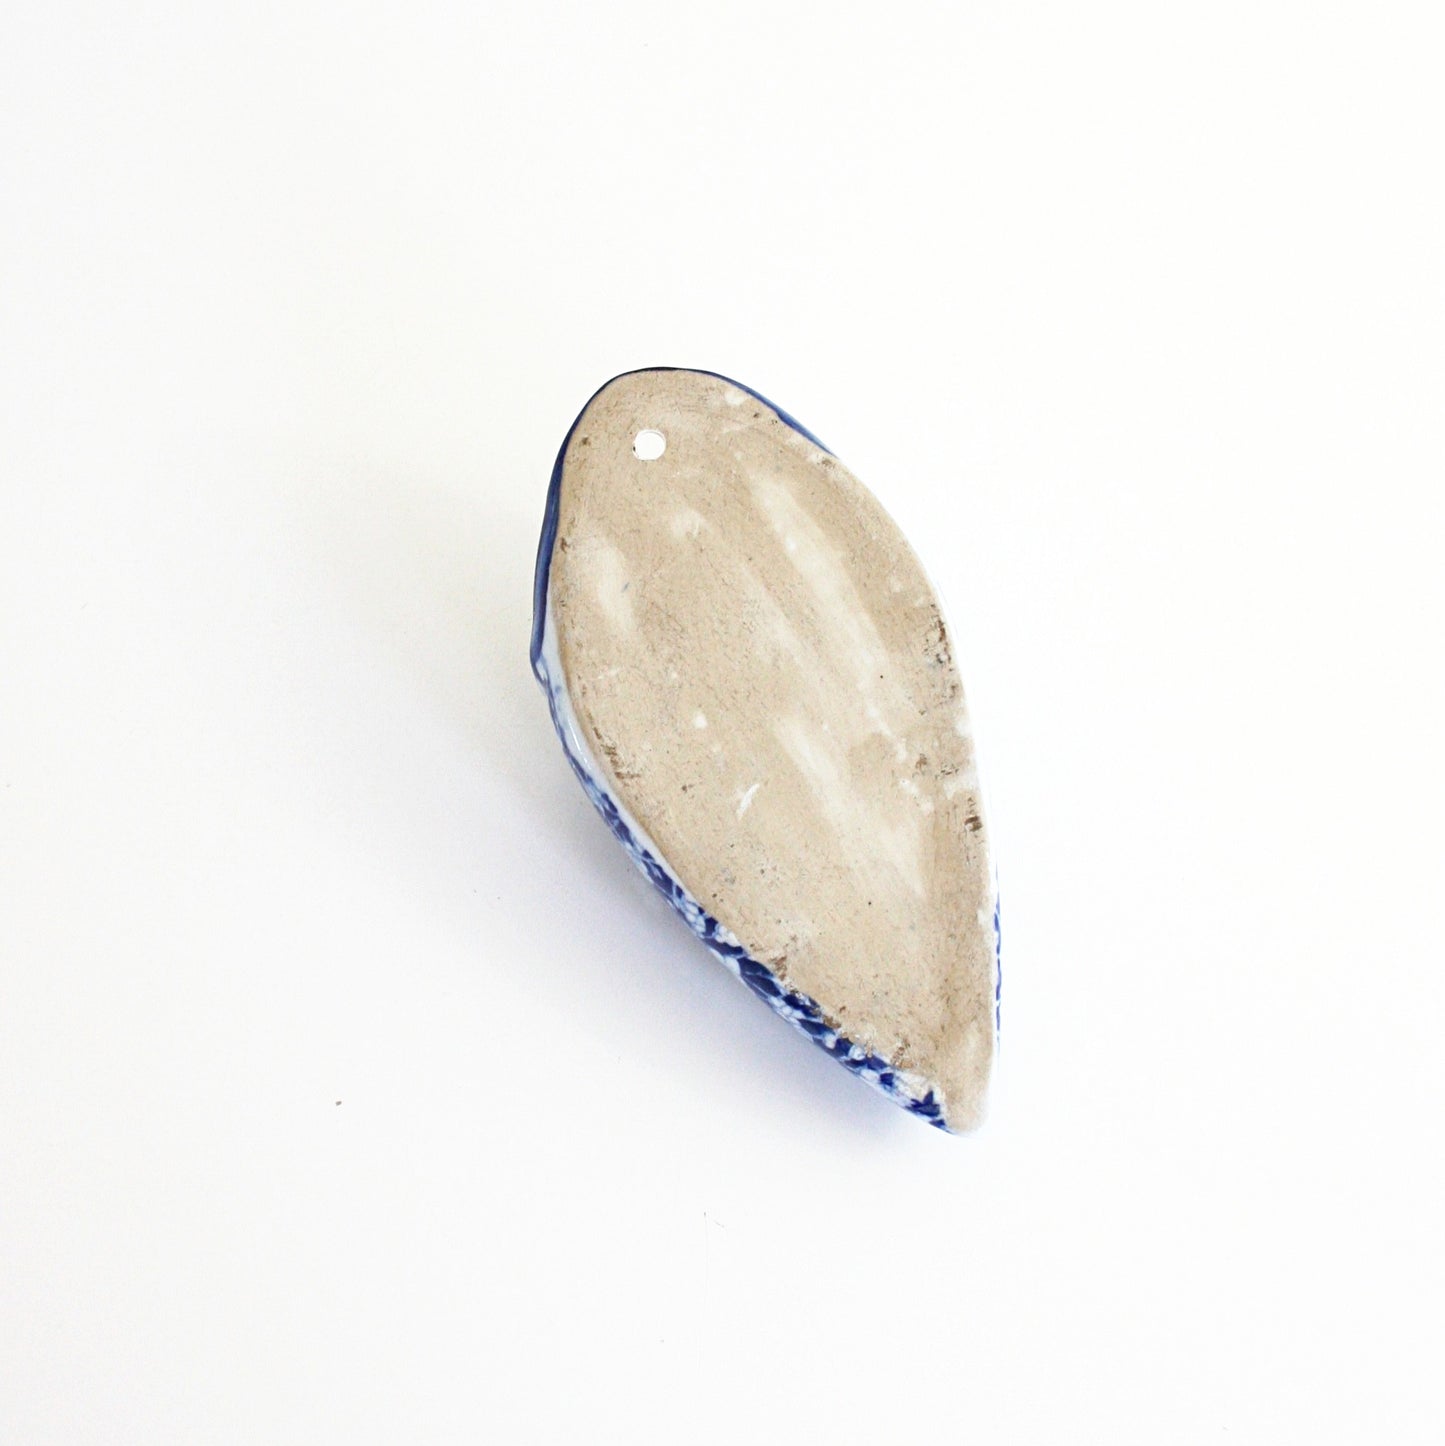 SOLD - Vintage Ceramic Cobalt Blue and White Calico Wall Pocket